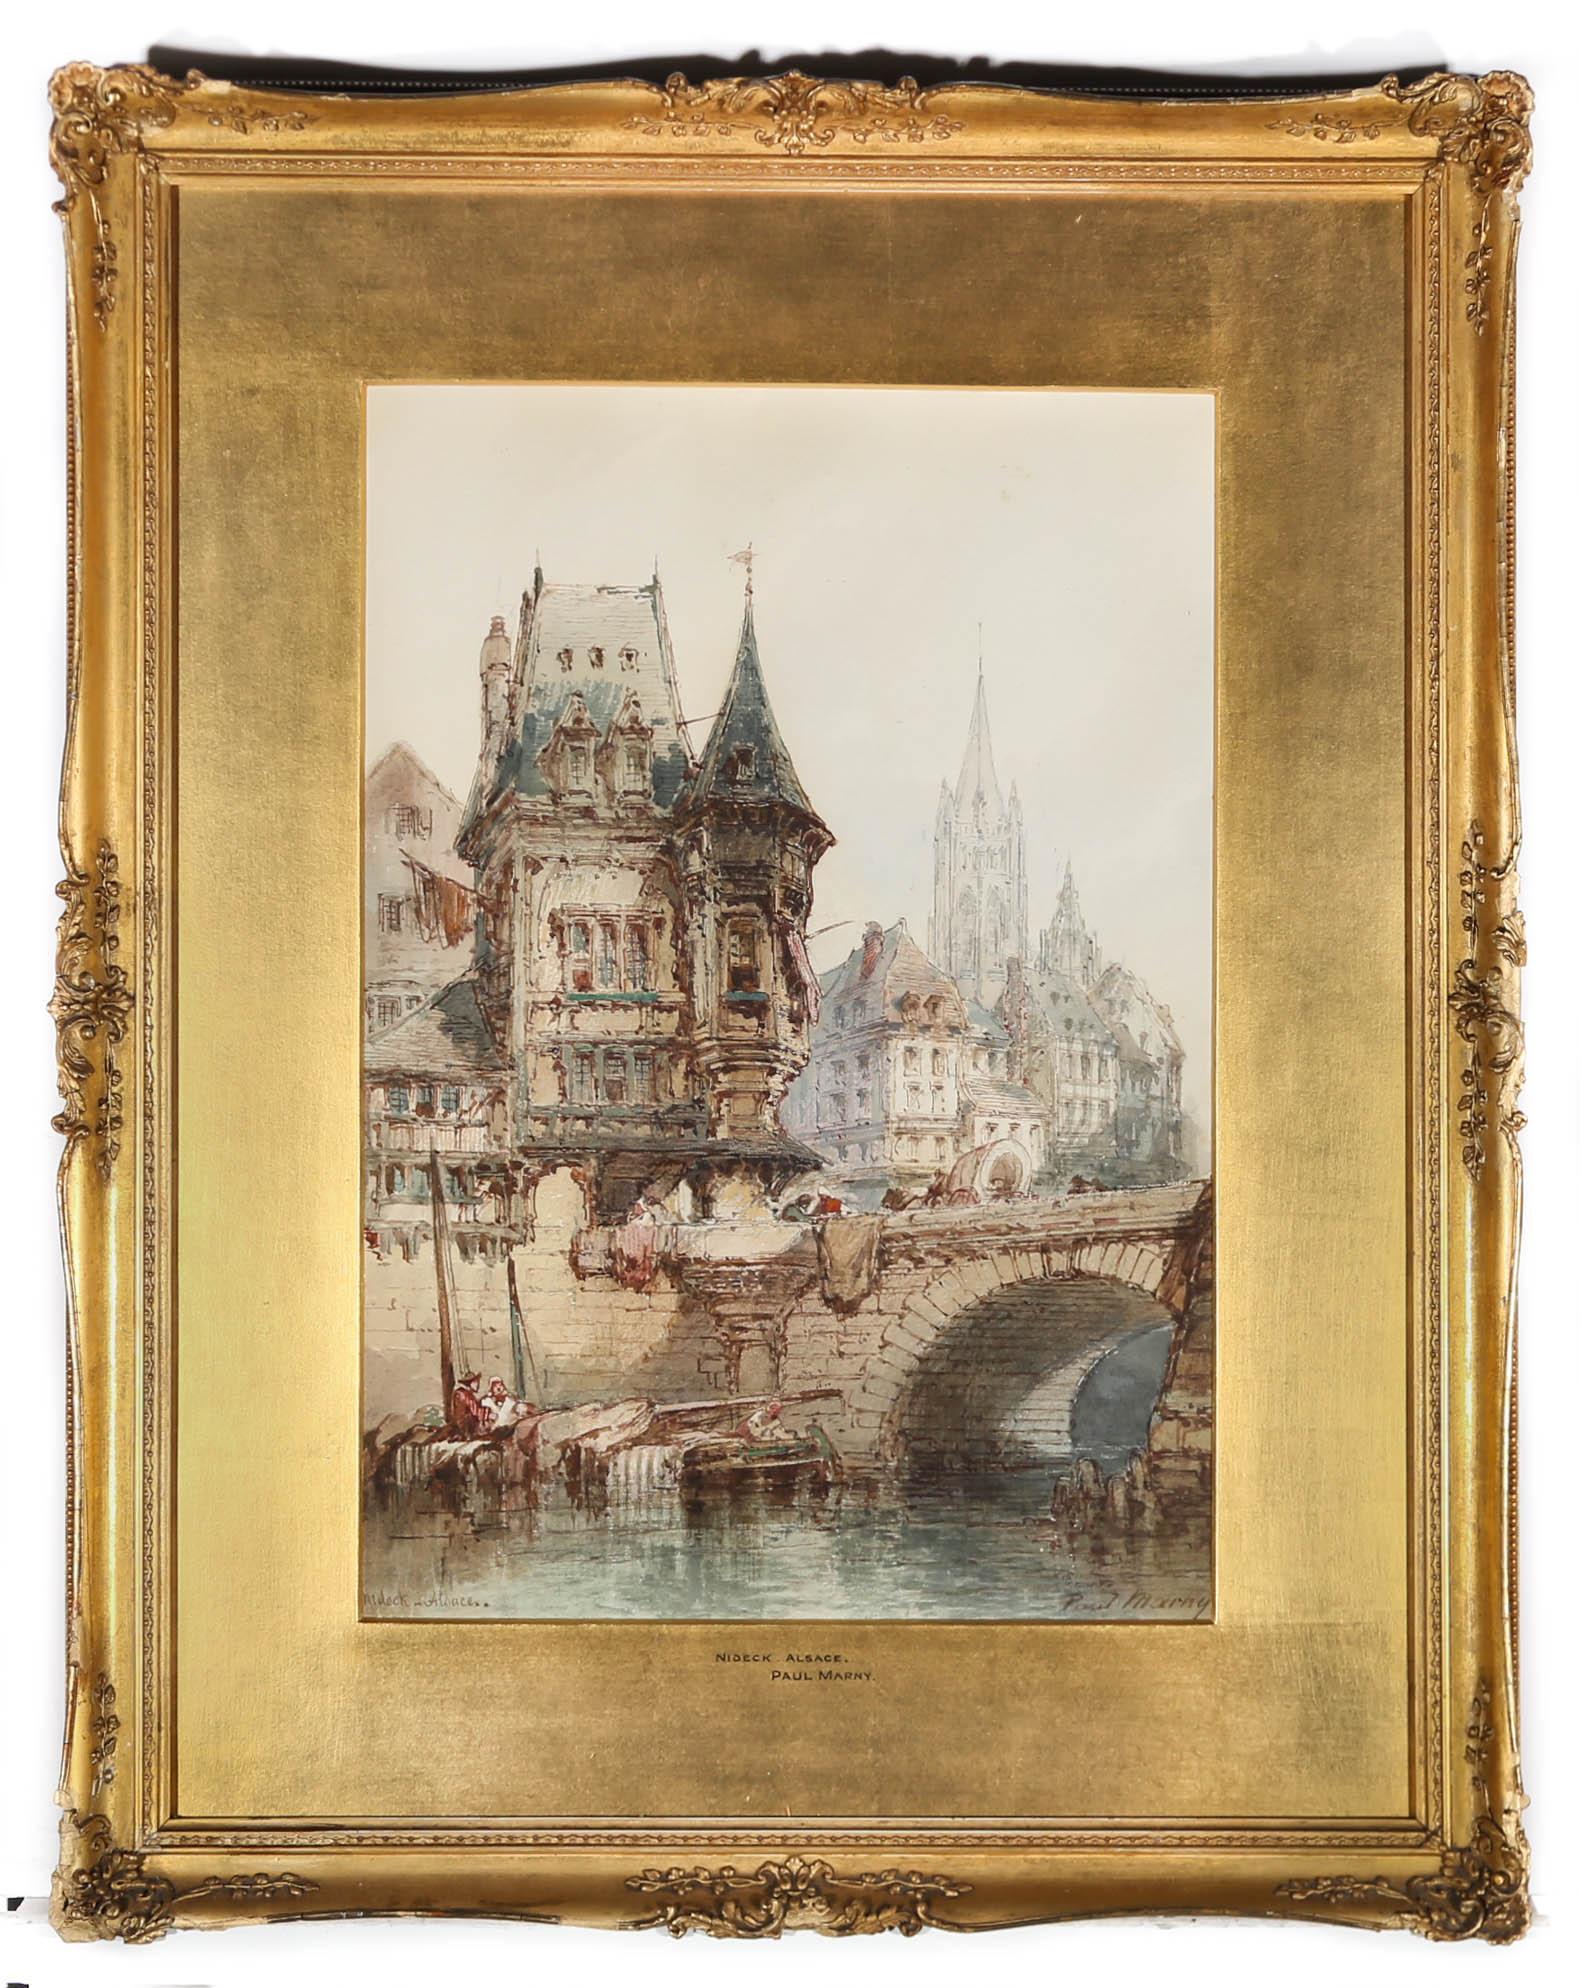 Paul Marny (1829-1914) - Aquarelle du 19e siècle, Nideck, Alsace en vente 2